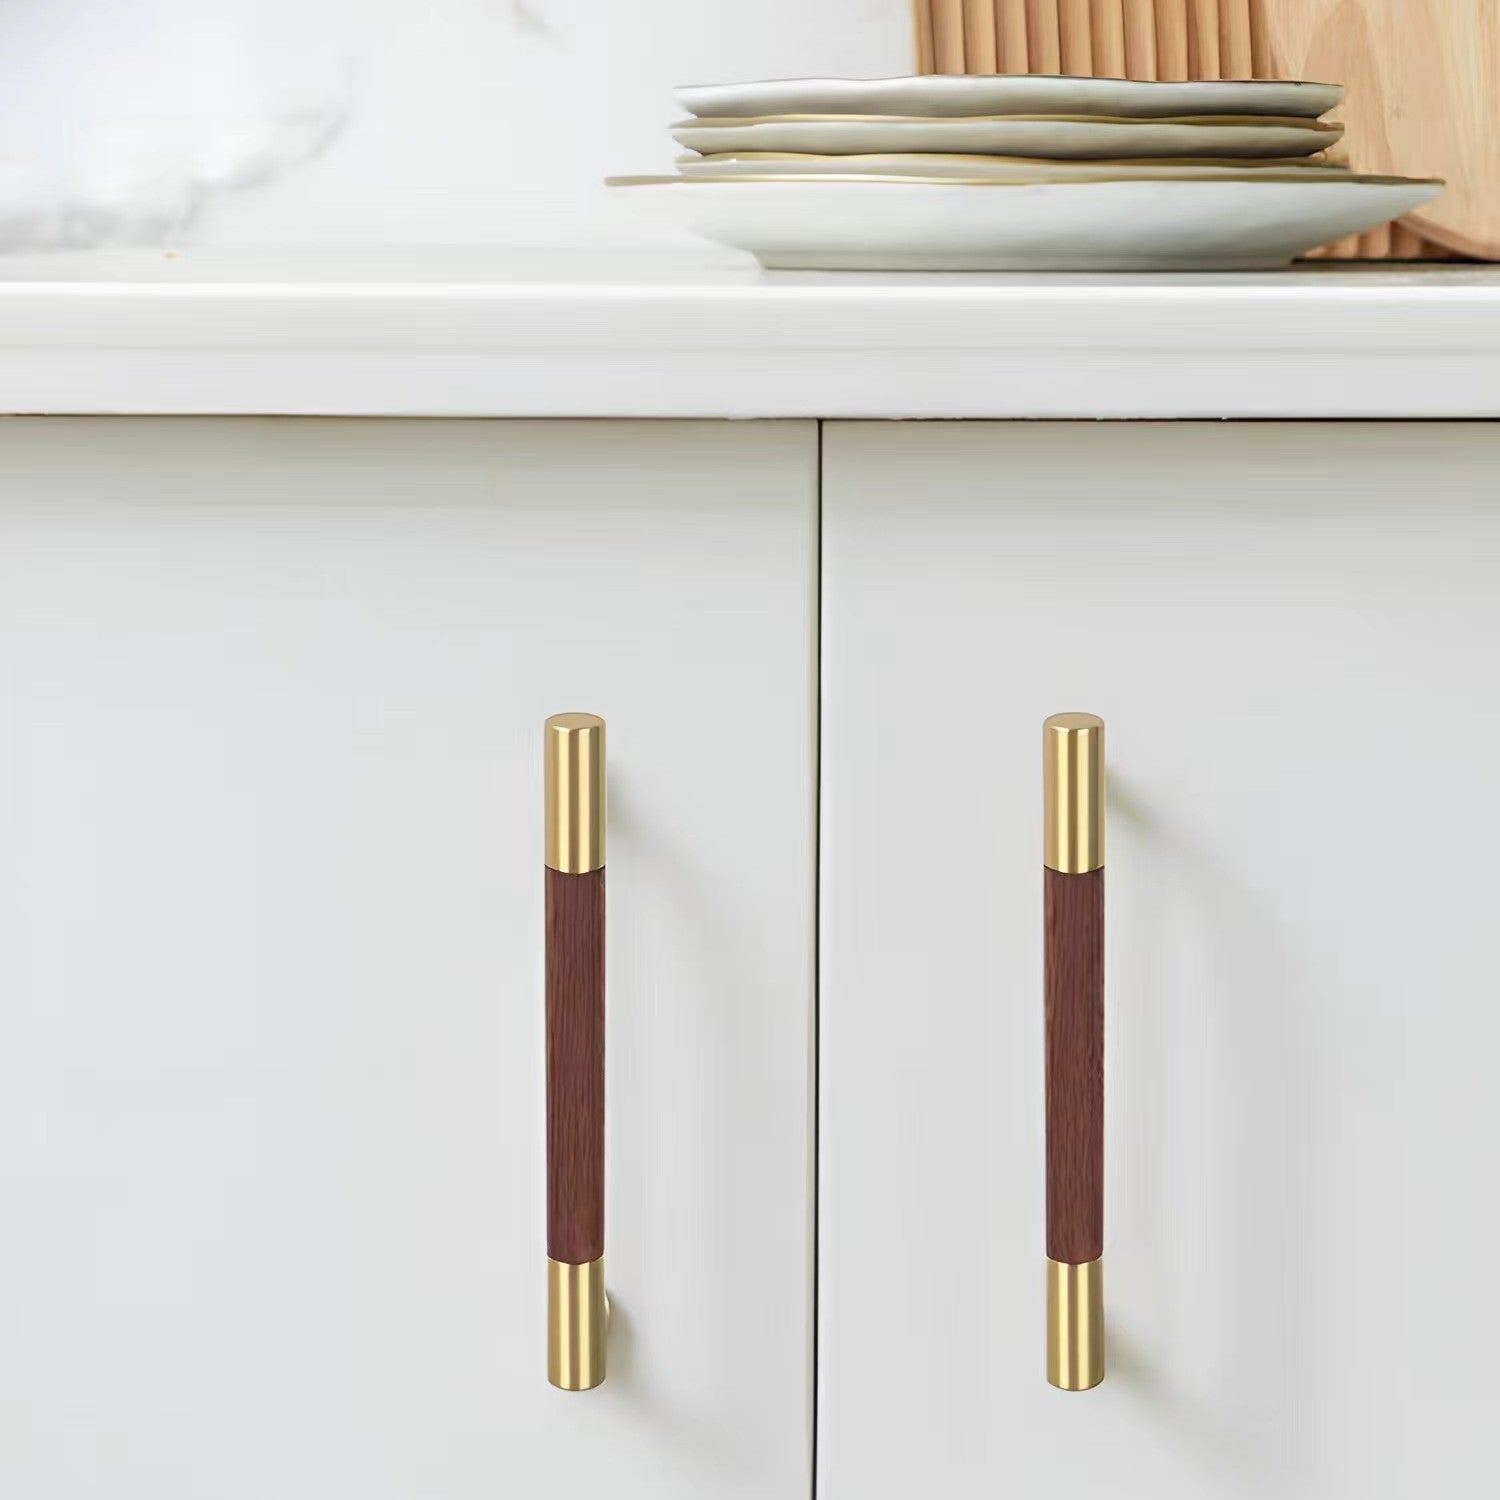 Retro Solid Wood Cabinet Bar Handles